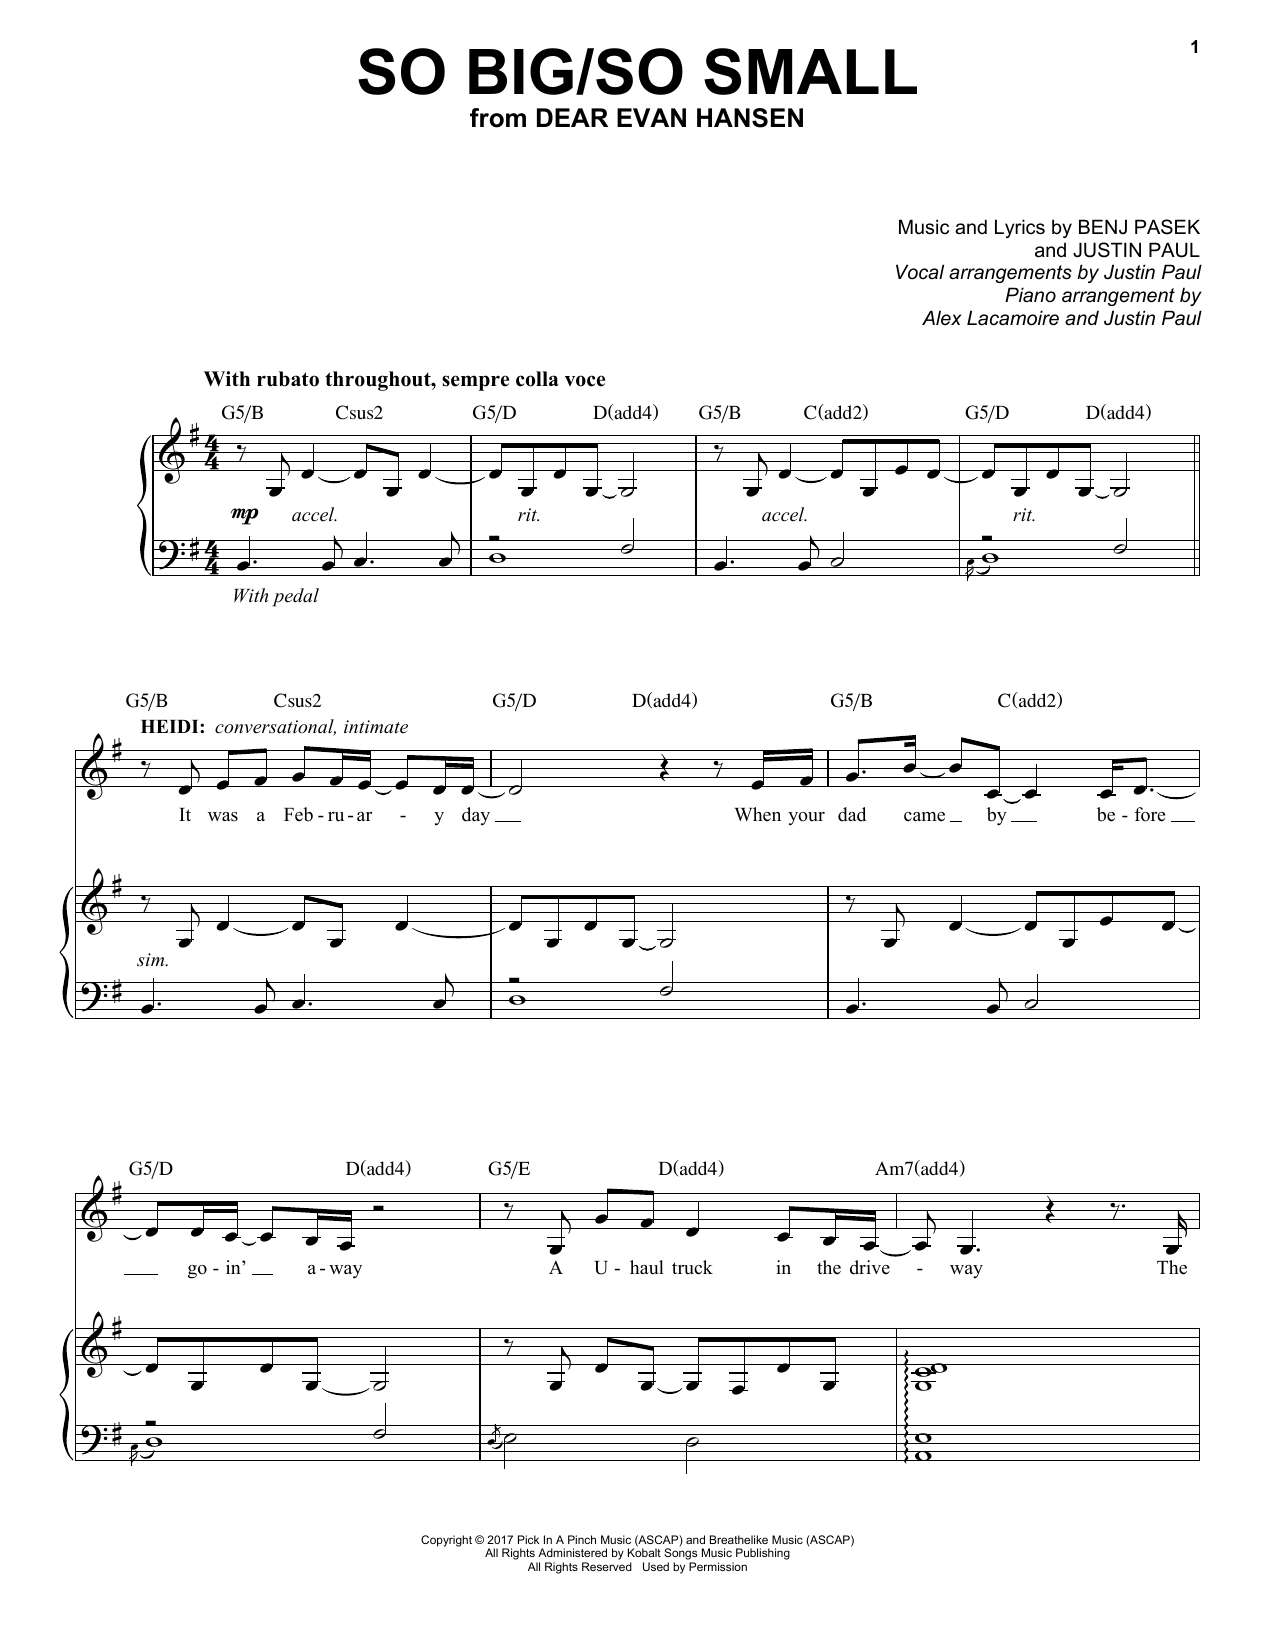 Pasek & Paul So Big/So Small (from Dear Evan Hansen) Sheet Music Notes & Chords for UKEDEH - Download or Print PDF